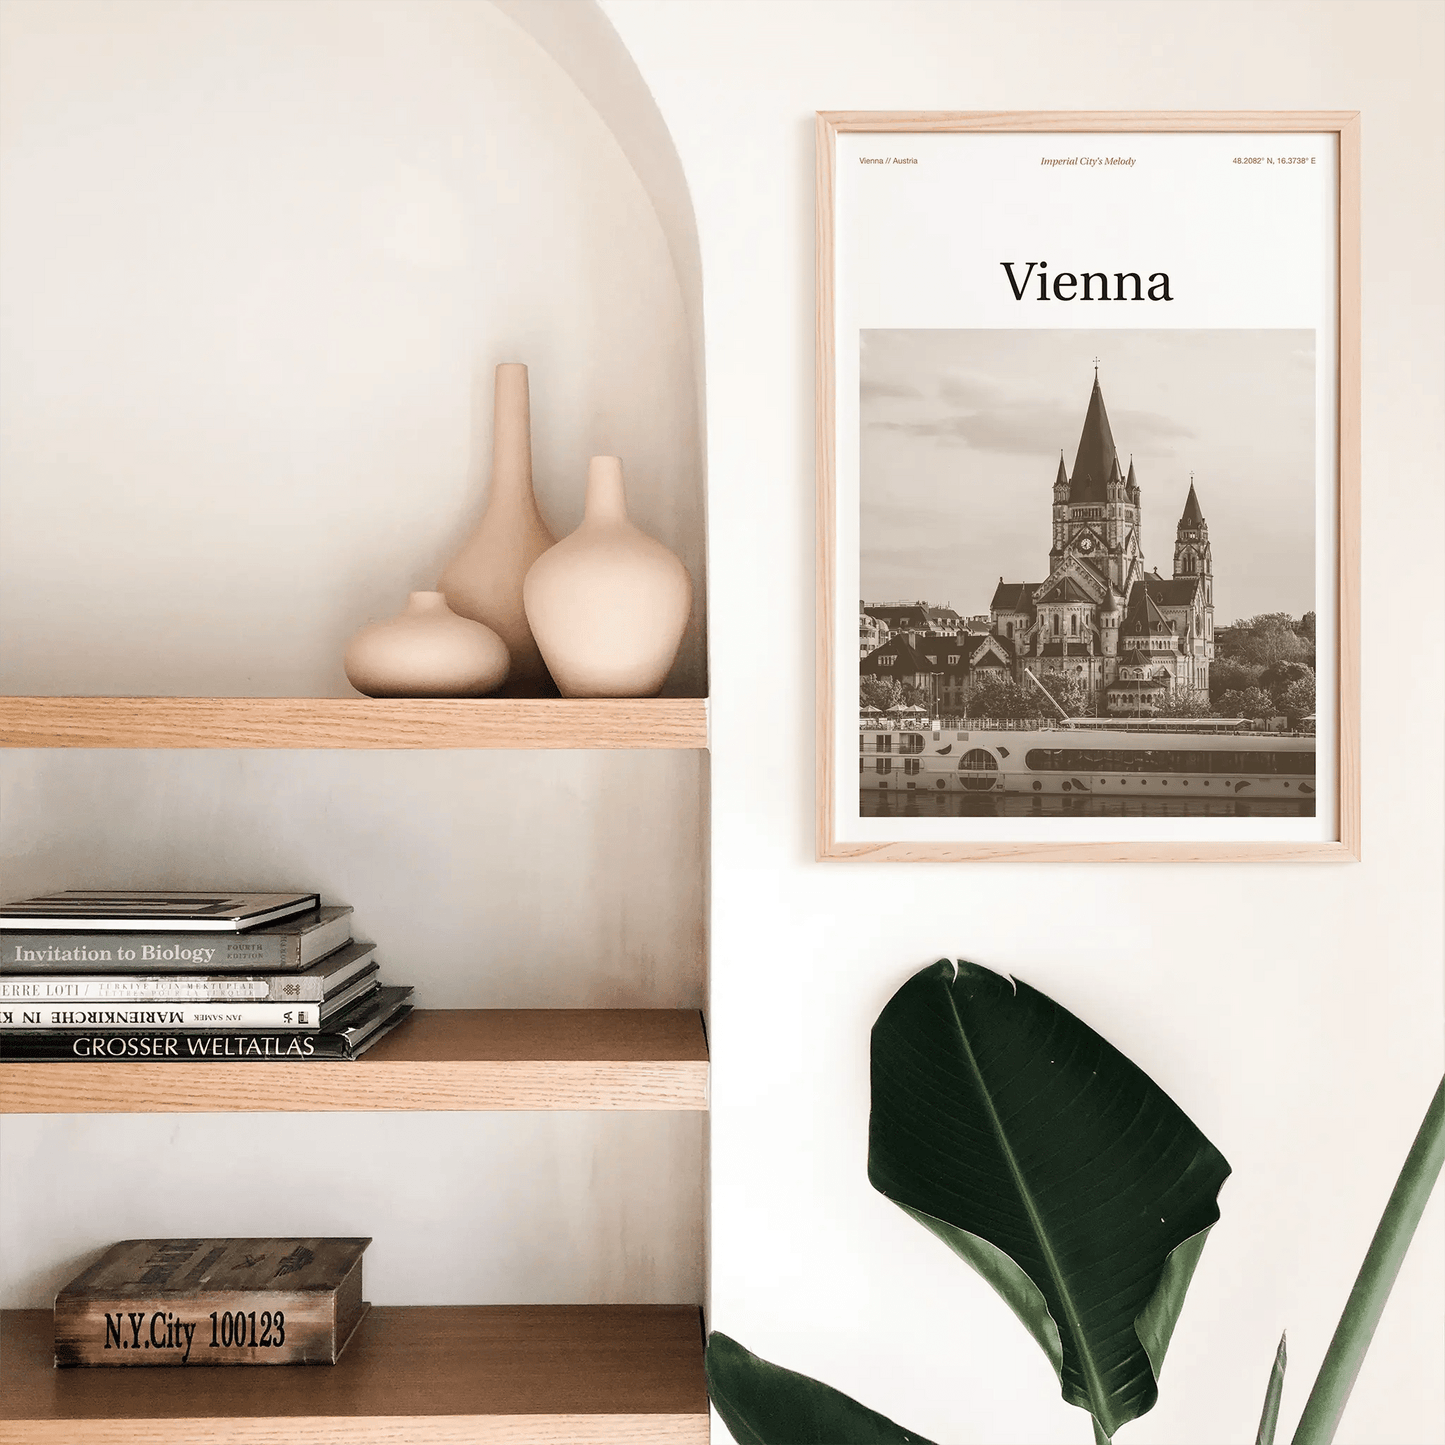 Vienna Essence Poster - The Globe Gallery